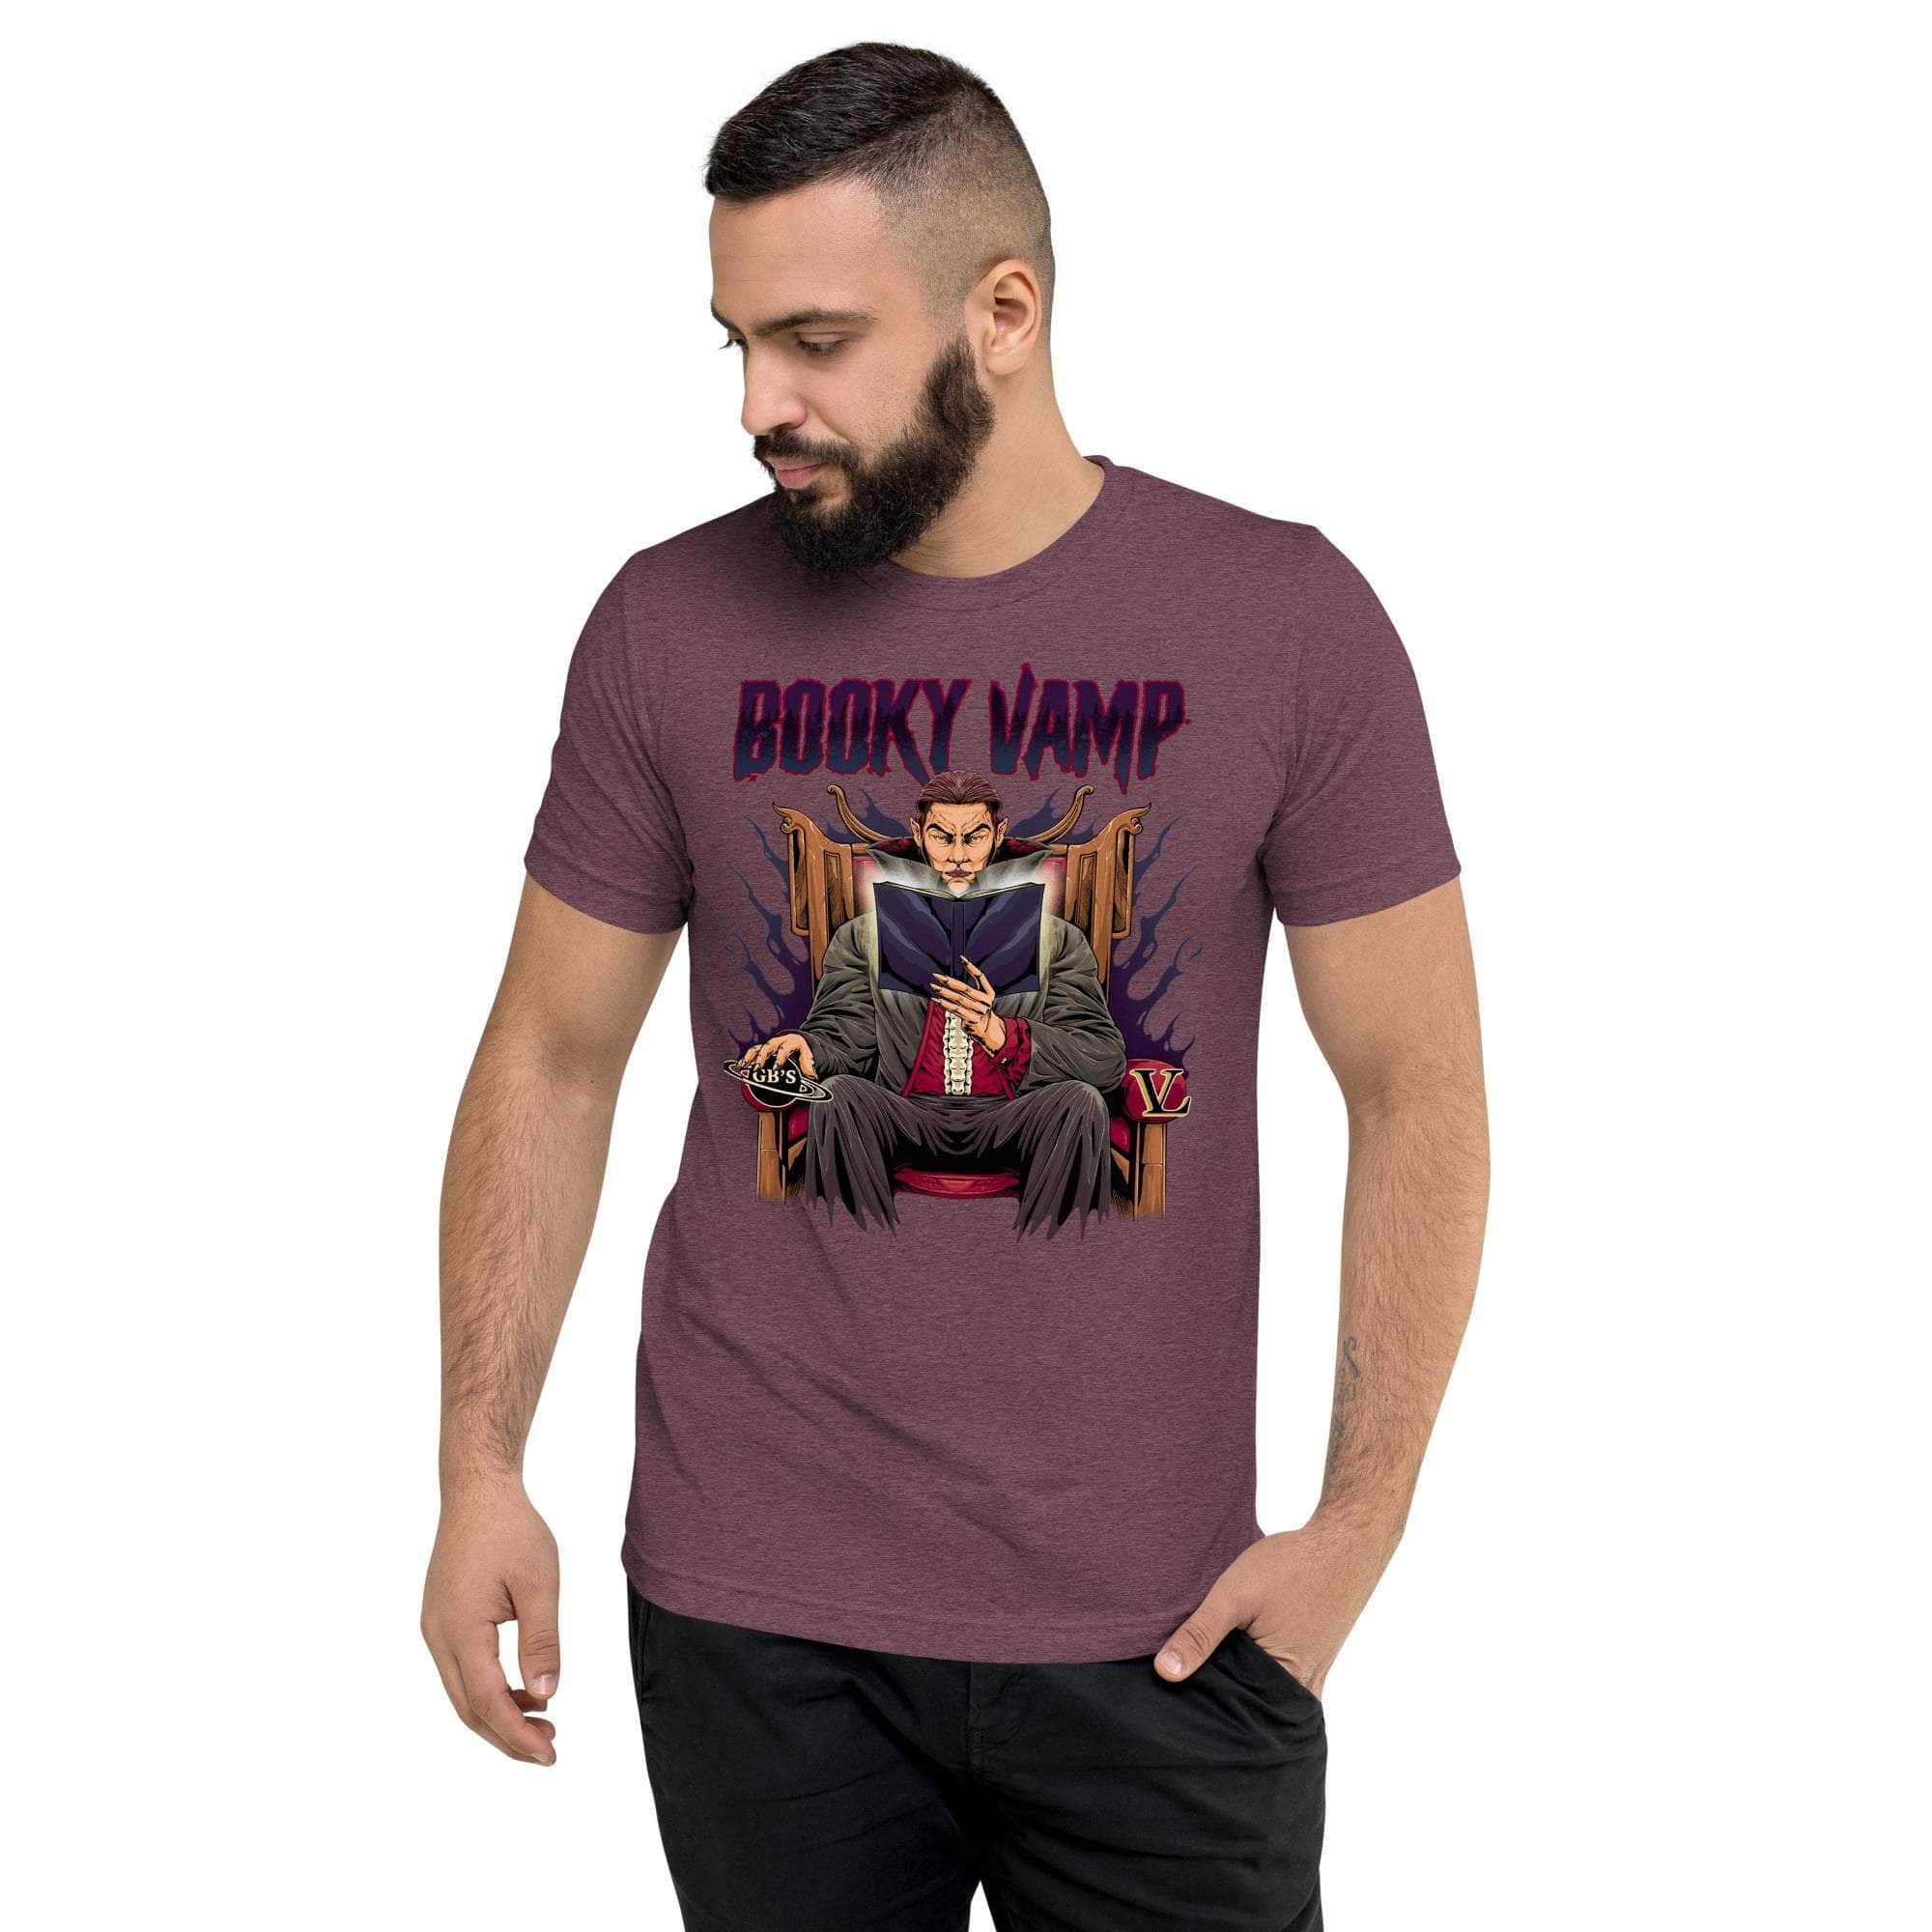 GBNY Maroon Triblend / XS Vamp Life X GBNY "Booky Vamp" T-shirt - Men's 2381652_6544